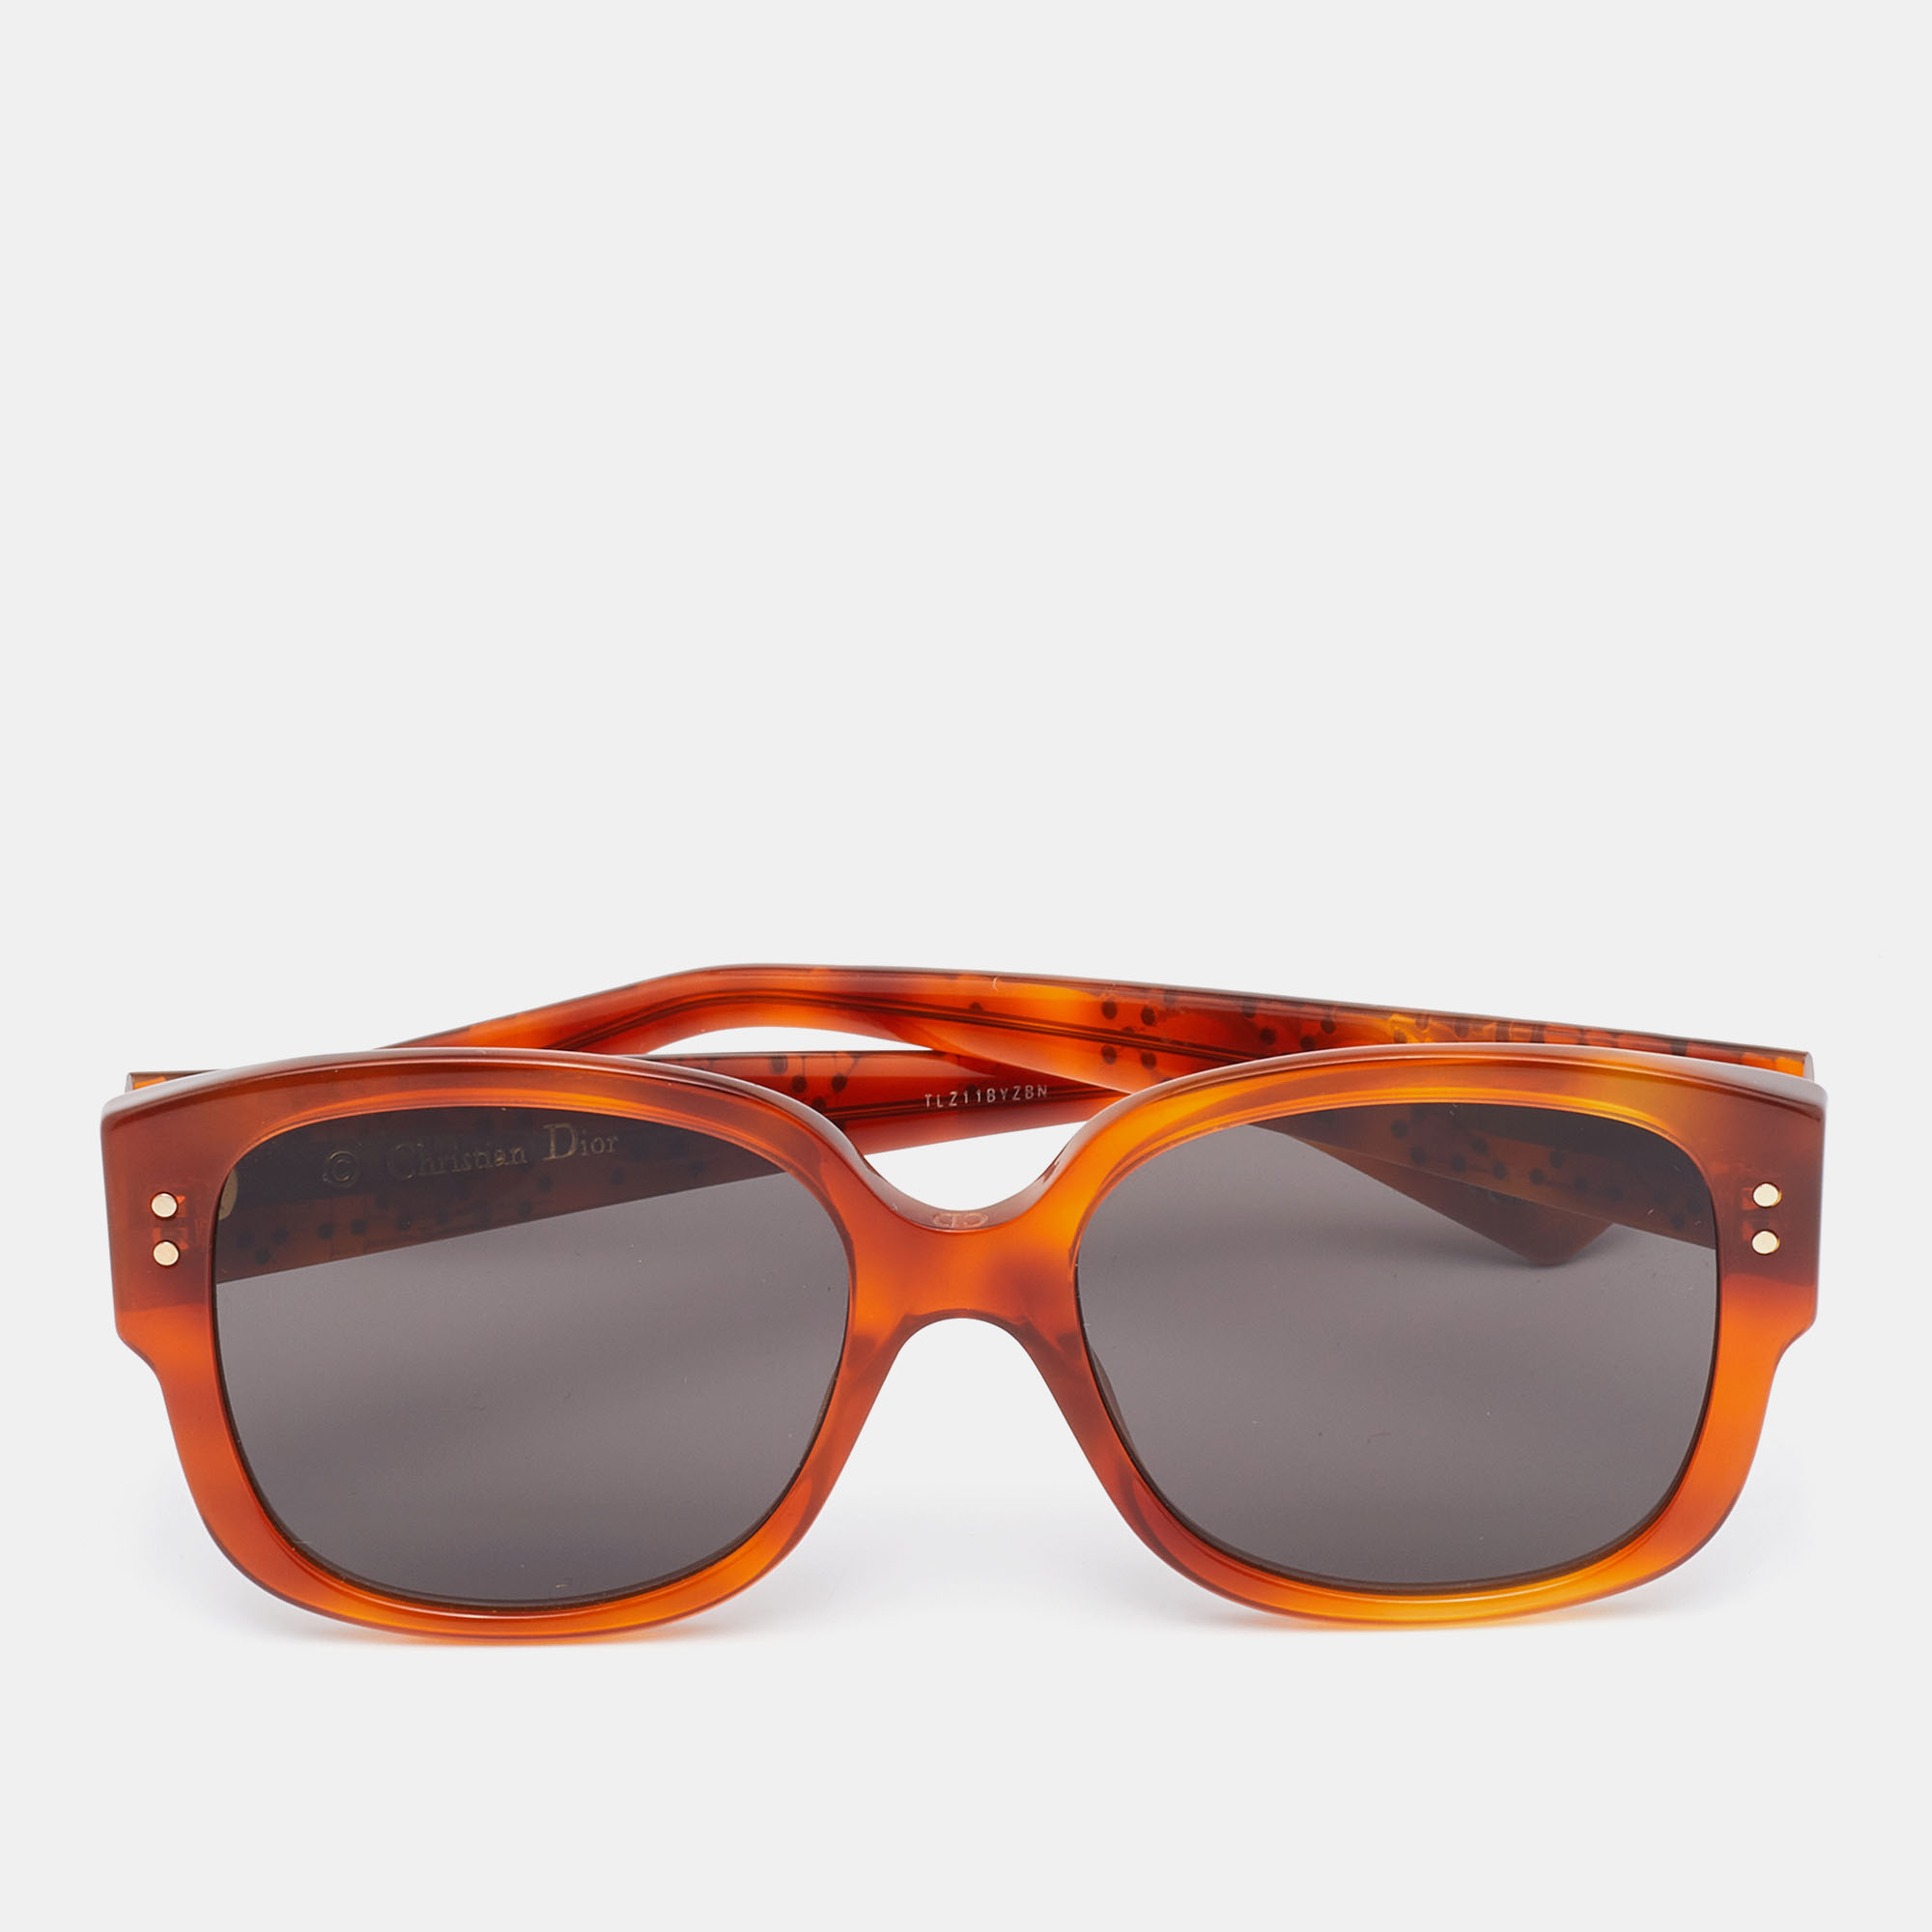 Dior Lady Studs Brown/Grey SX72K Rectangle Sunglasses